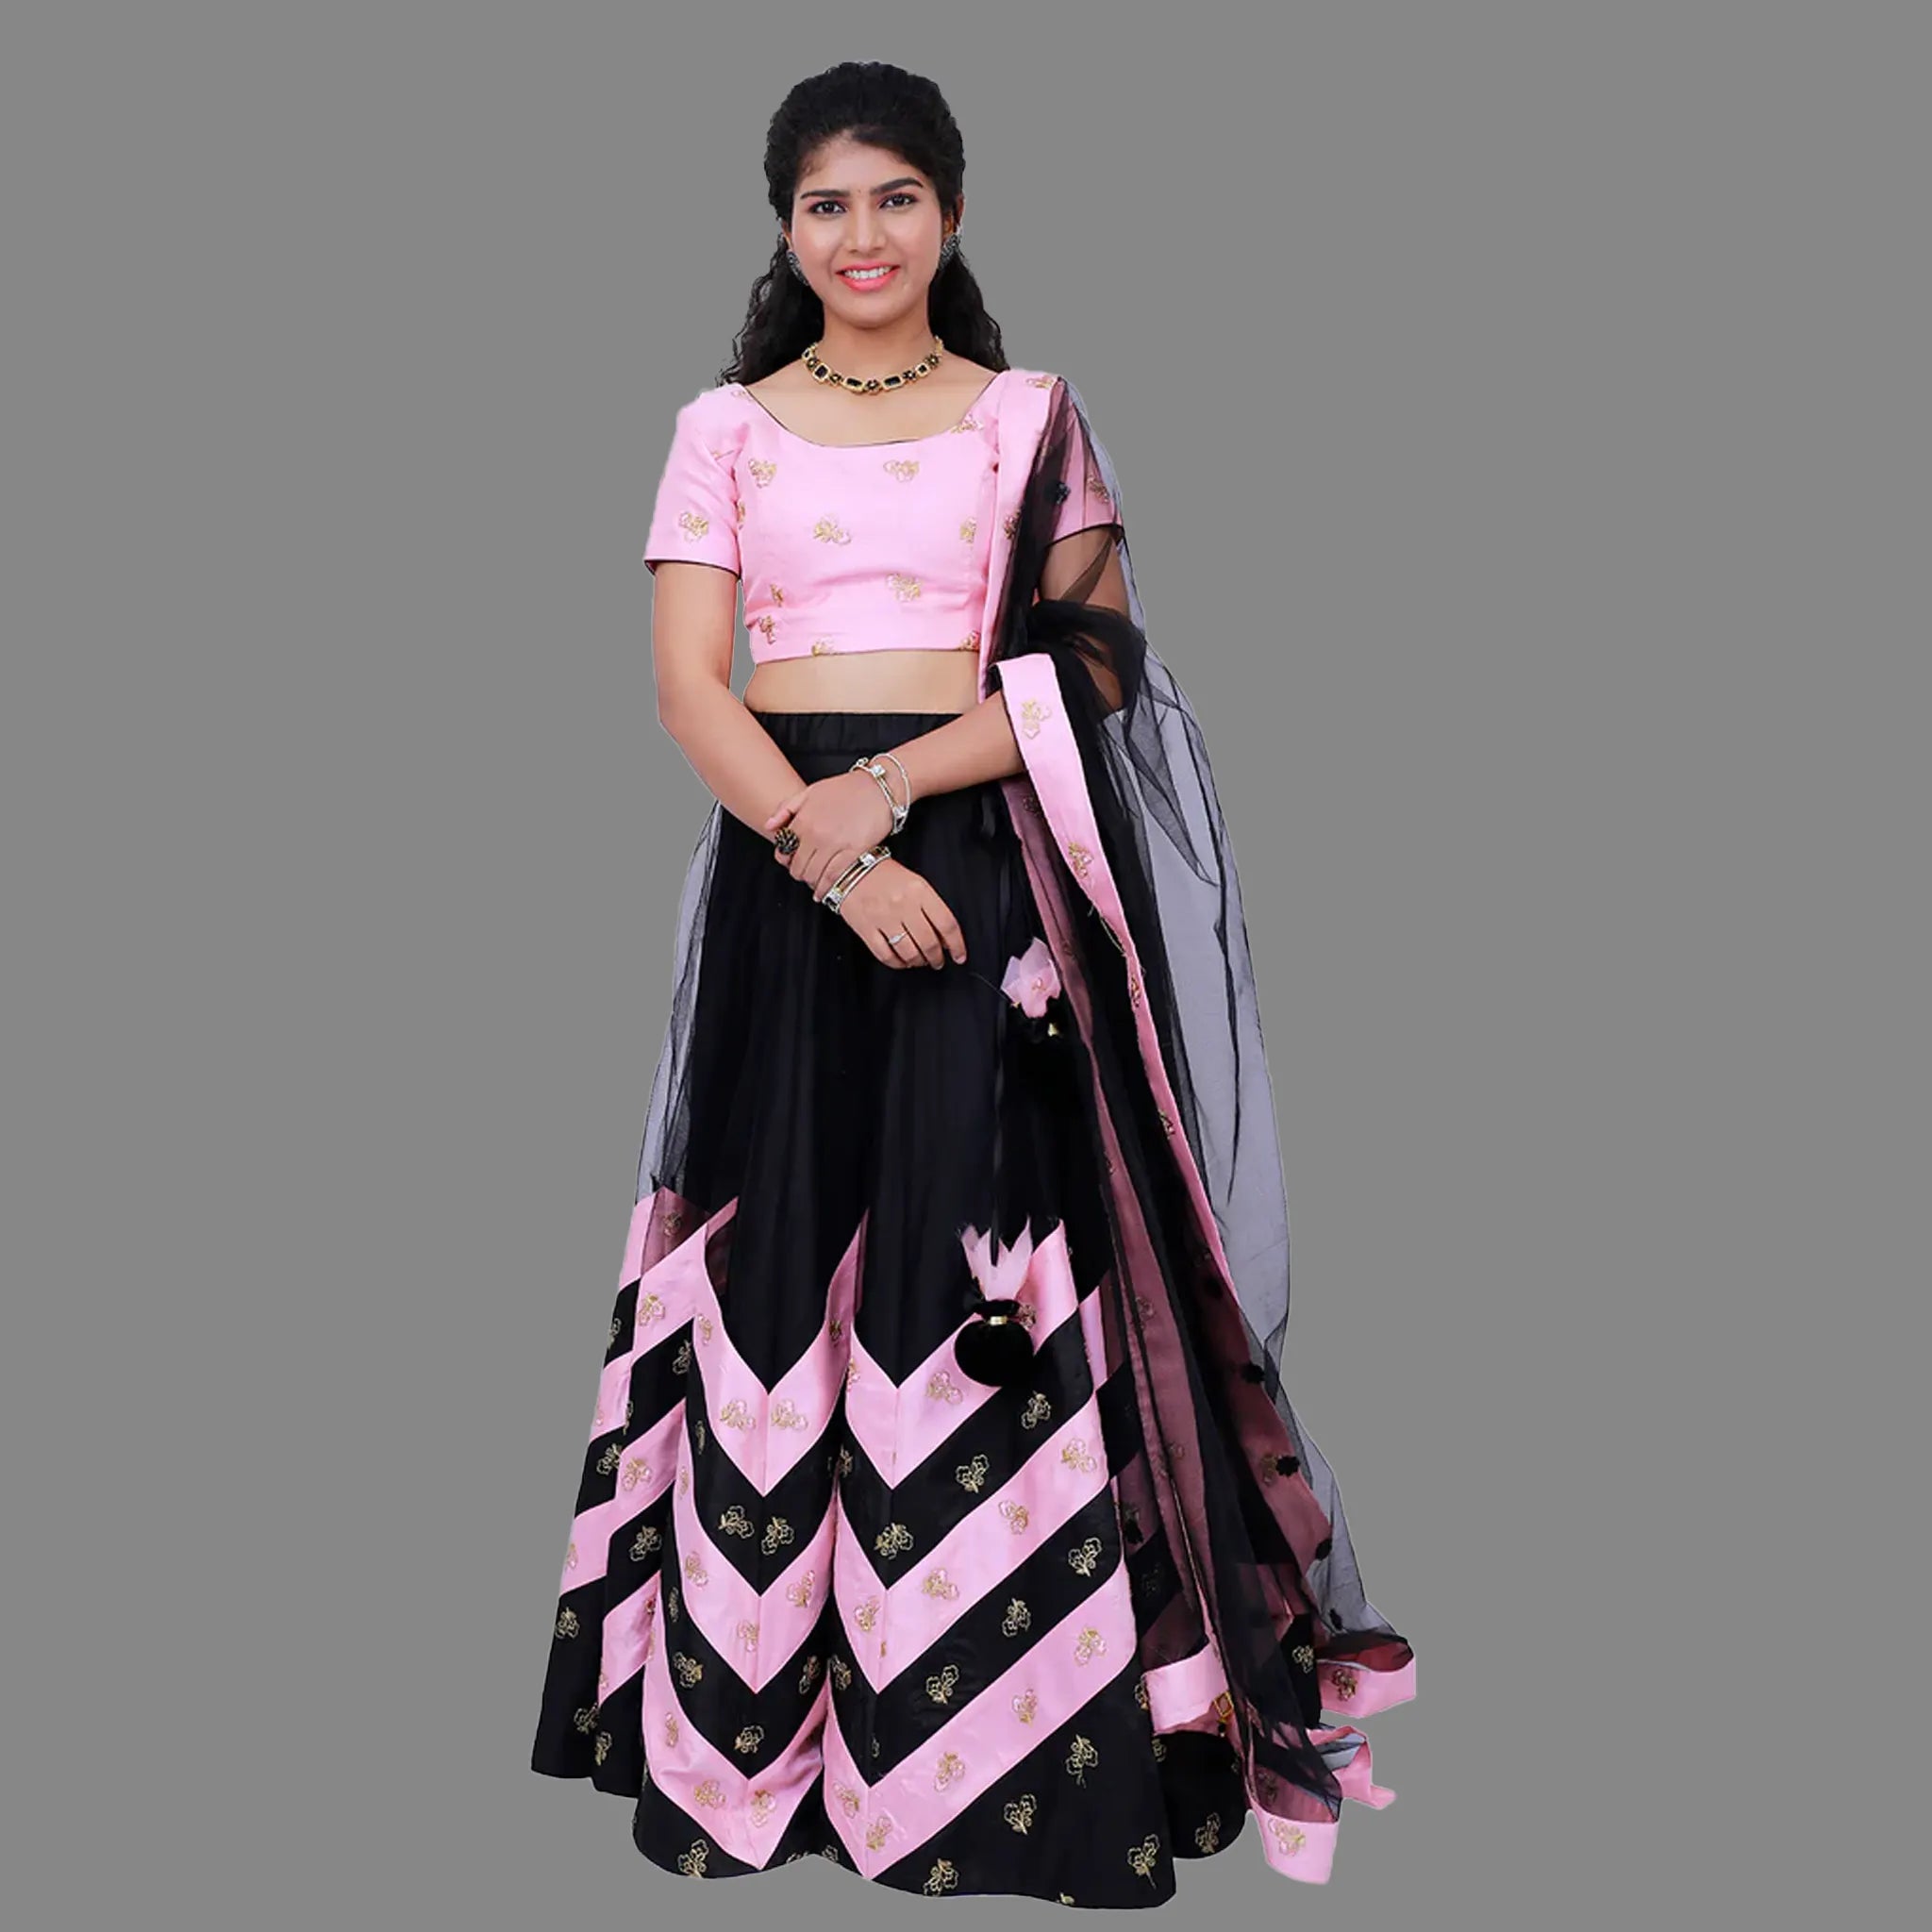 Buy Buy Net Pink Designer Lehenga Choli at Amazon.in